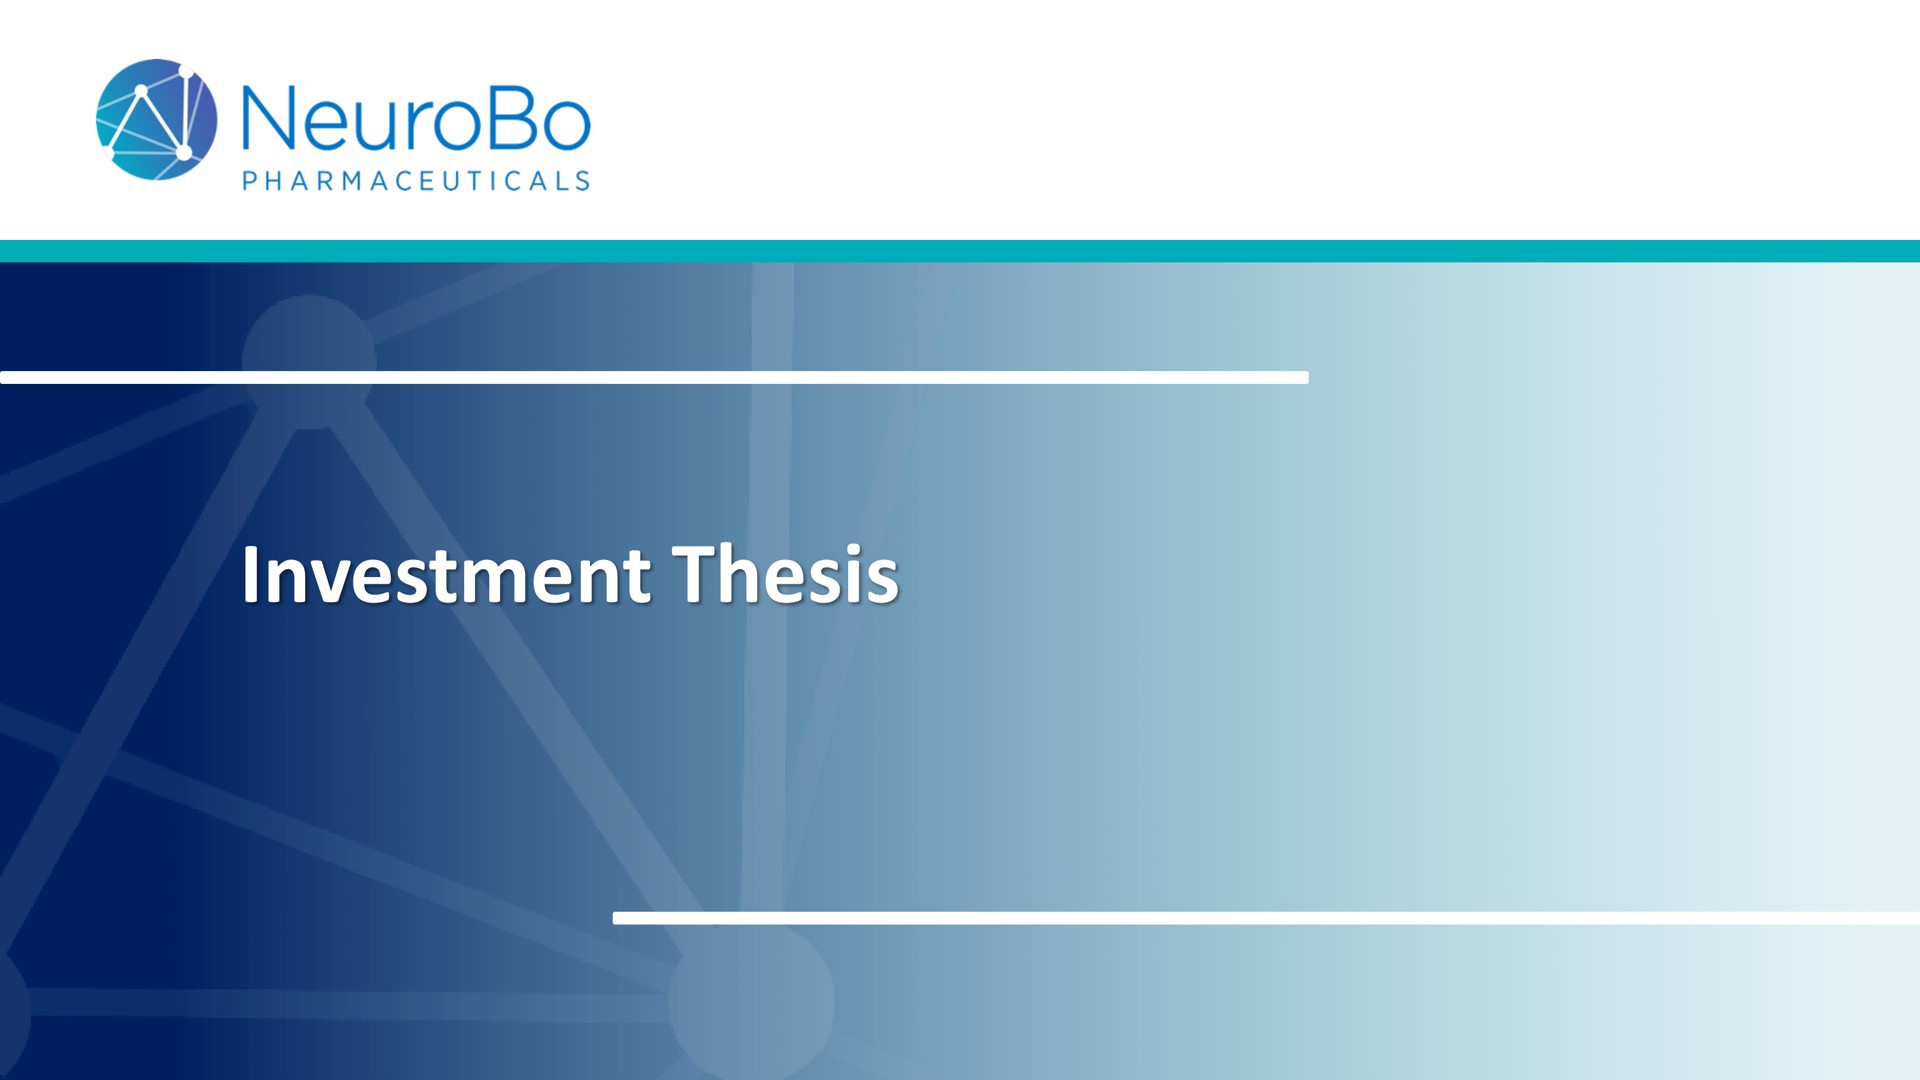 investment thesis as | NeuroBo Pharmaceuticals